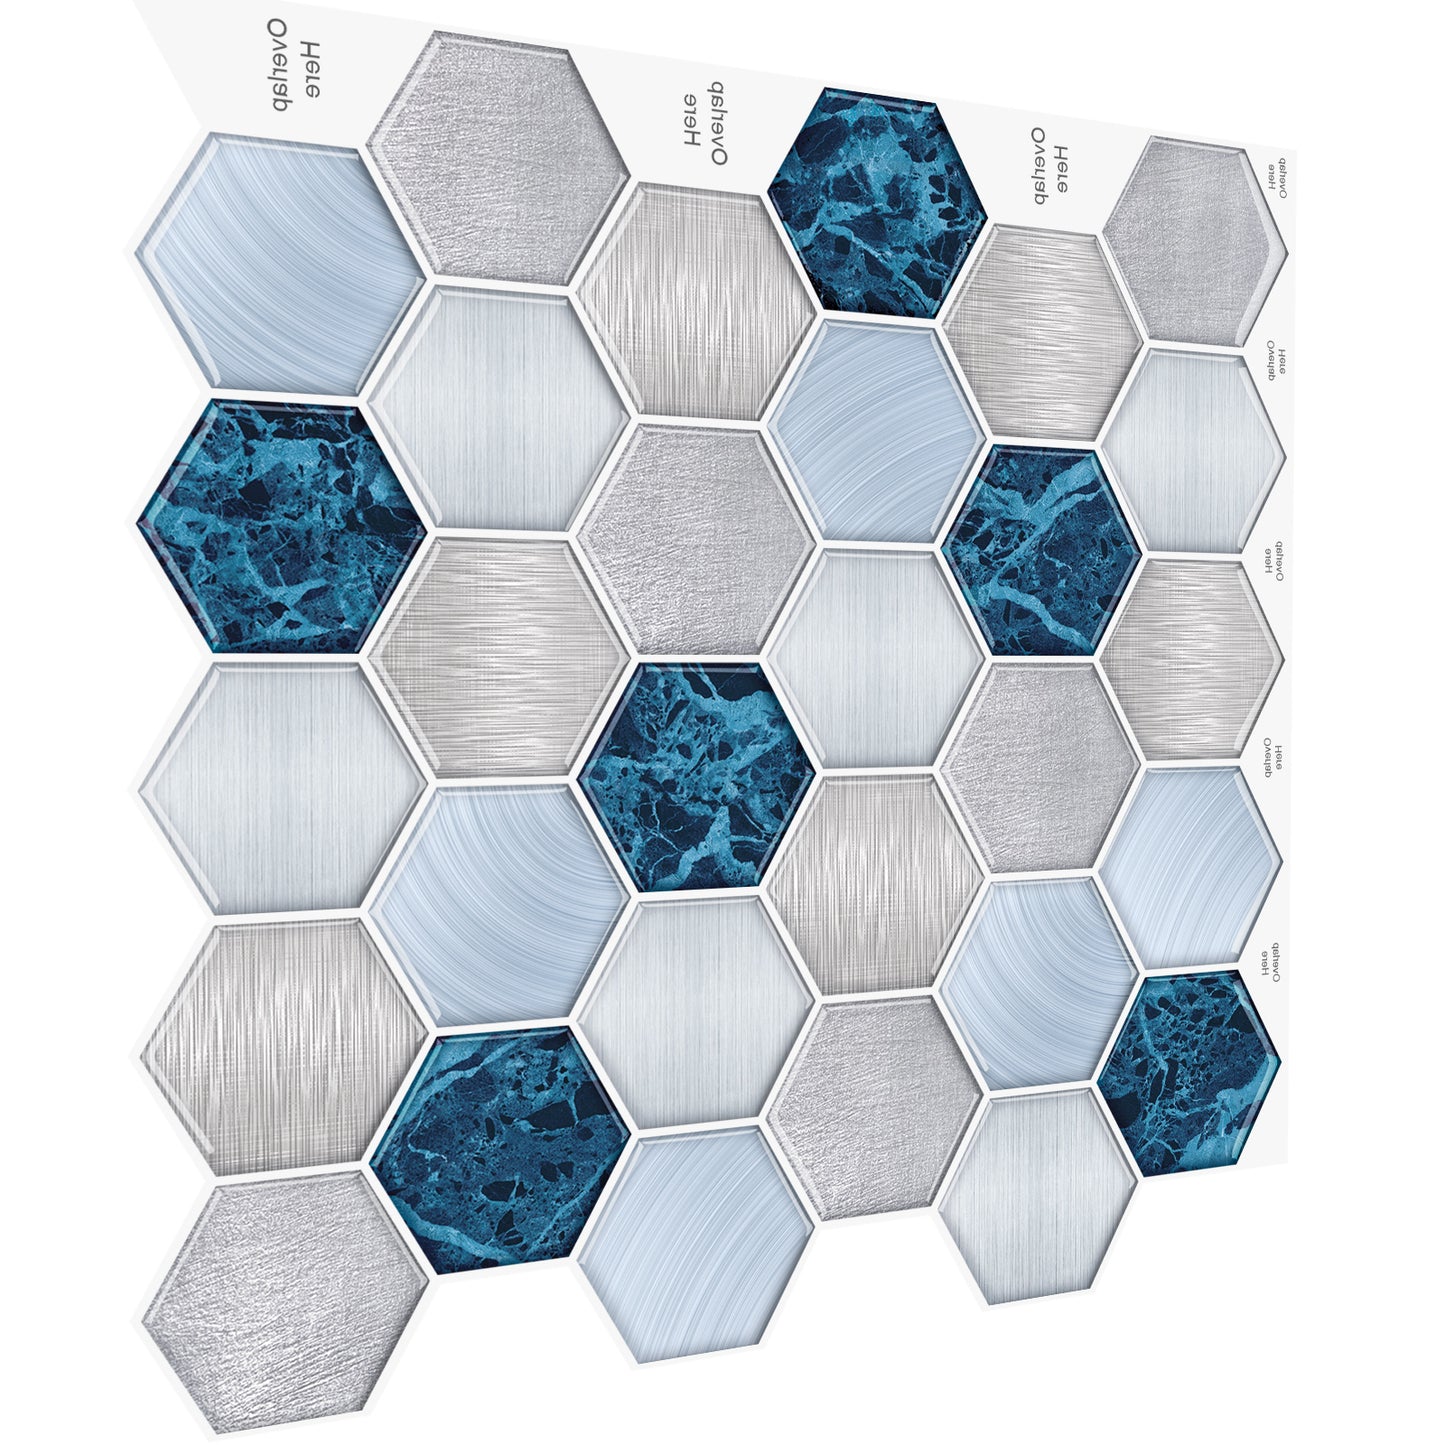 MT1228 - Hexagon Decals Peel And Stick Backsplash Tile , 12" x 12" White Tile